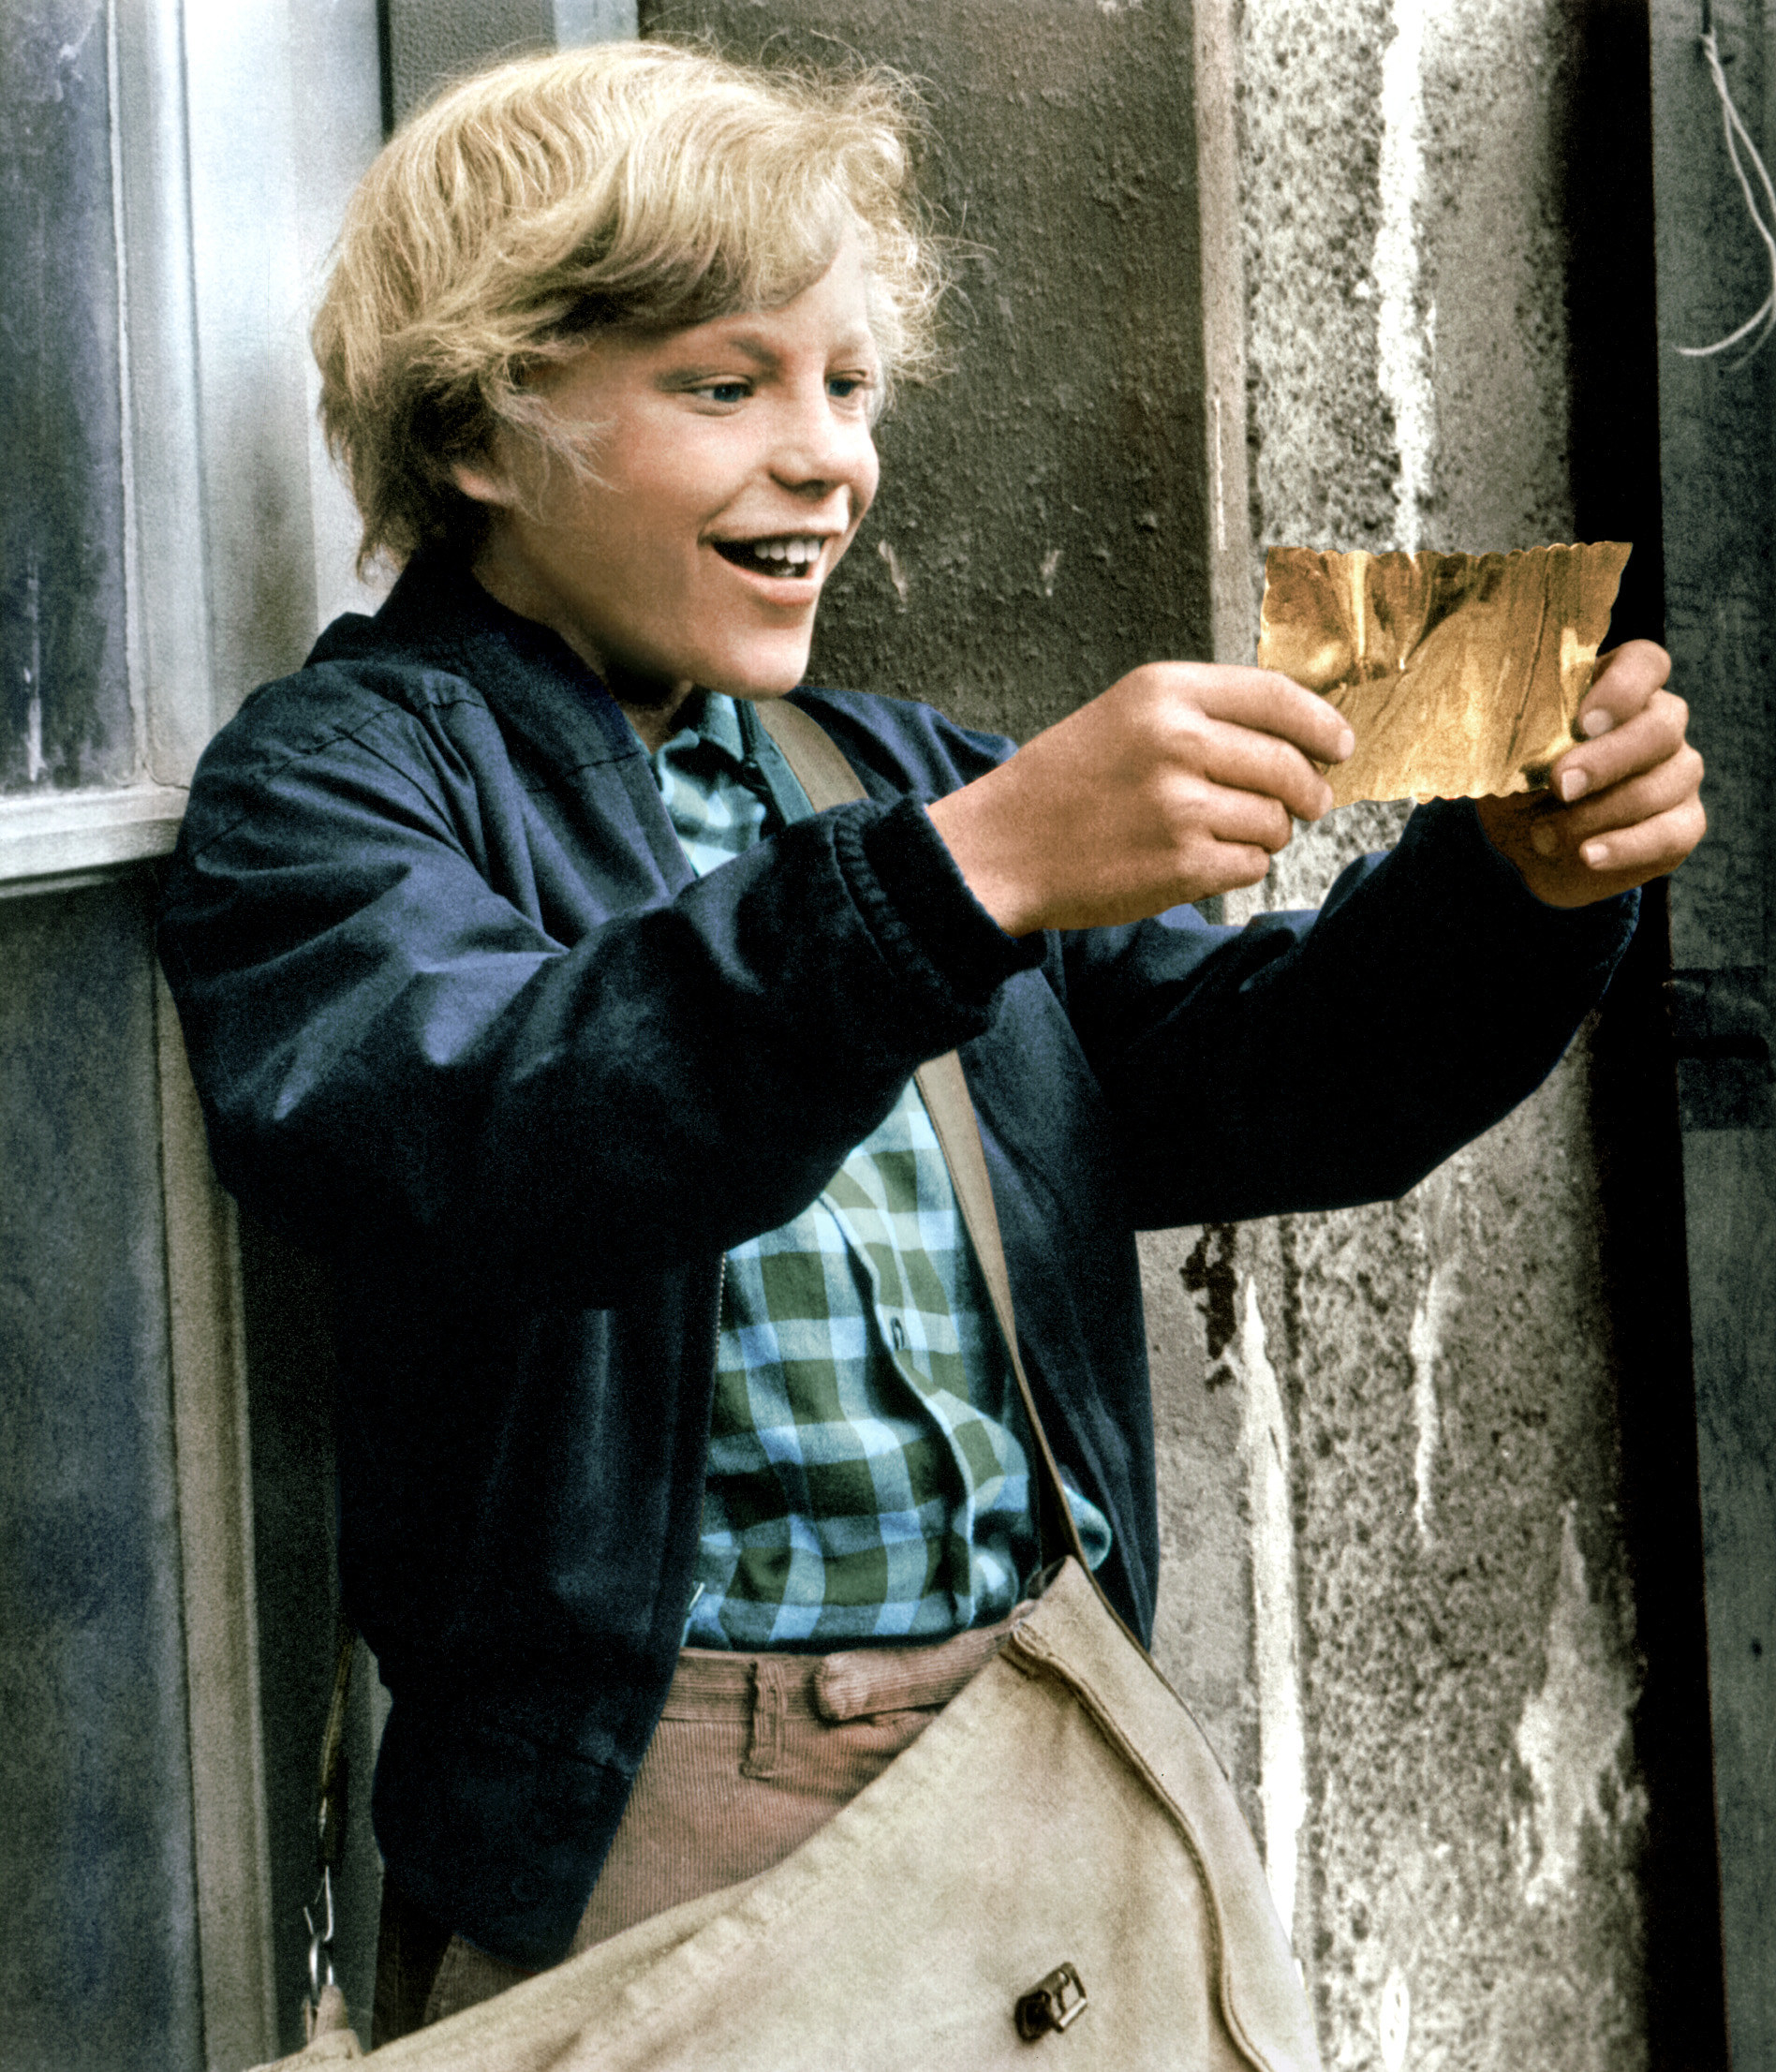 Charlie finds the golden ticket